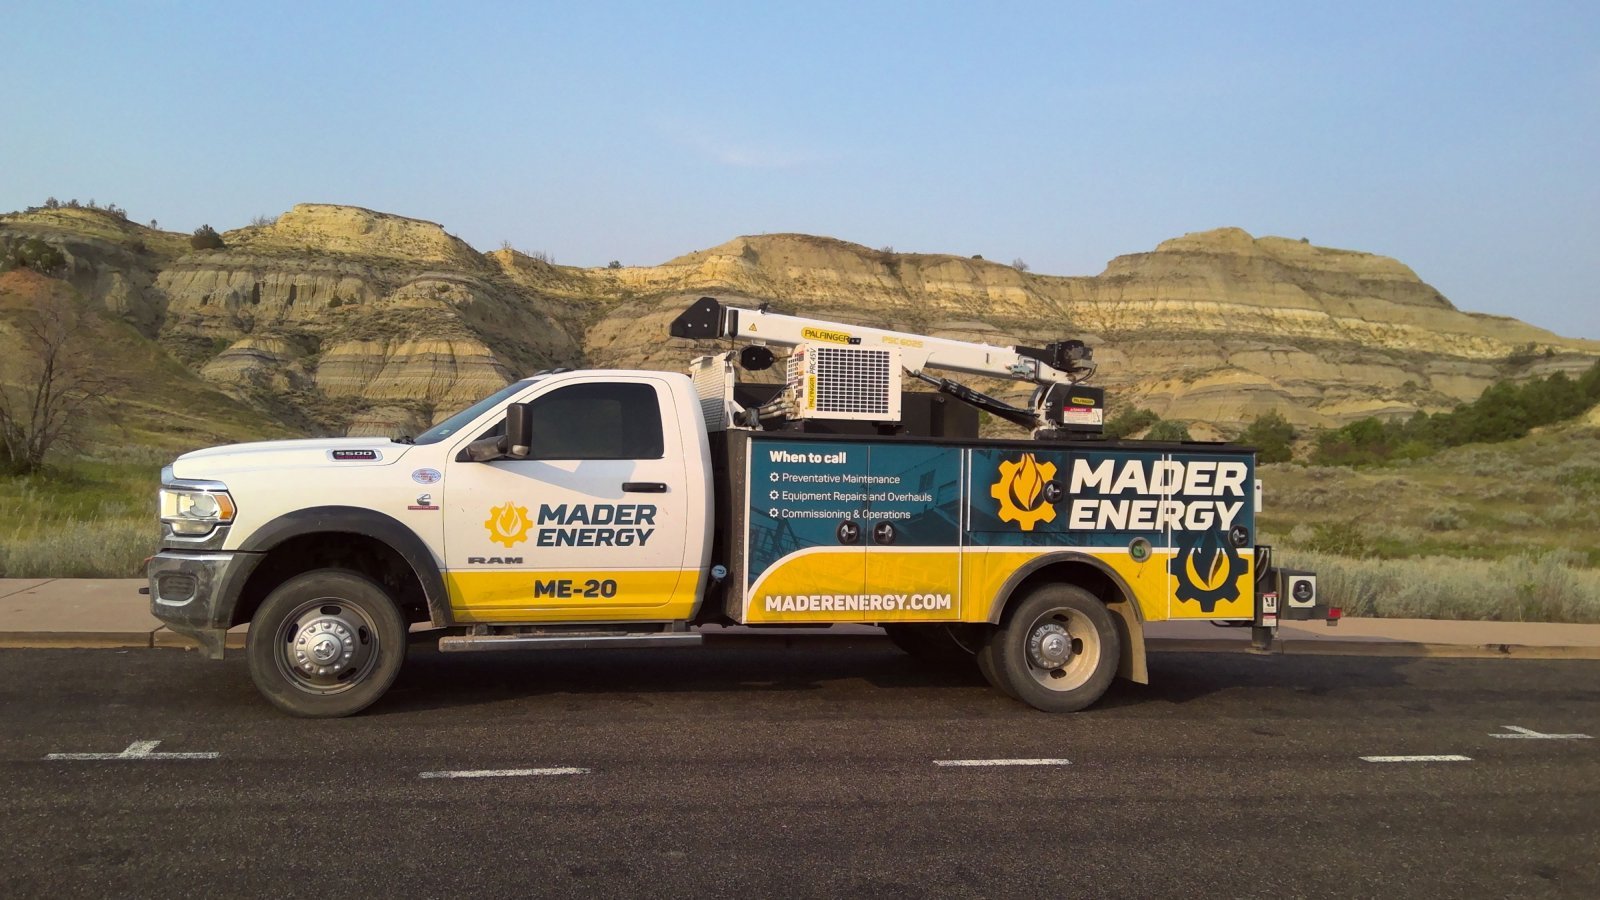 Mader Energy – Experts in Gas Compressor & Power Gen Equipment Maintenance